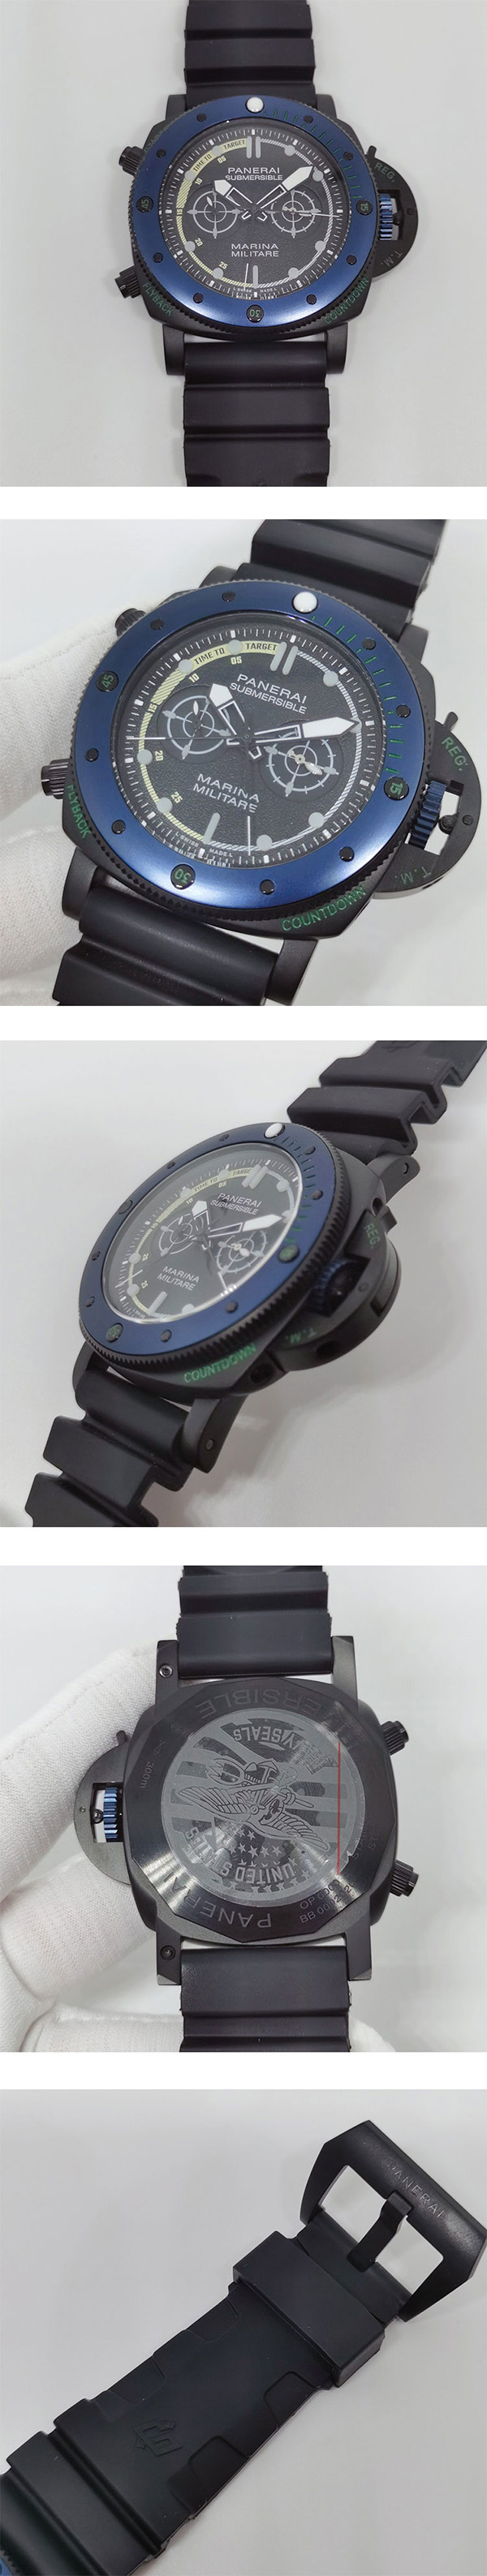 Paneraiコピー時計 PAM 2239新作 品質 腕時計【Asian ETAムーブメント搭載】